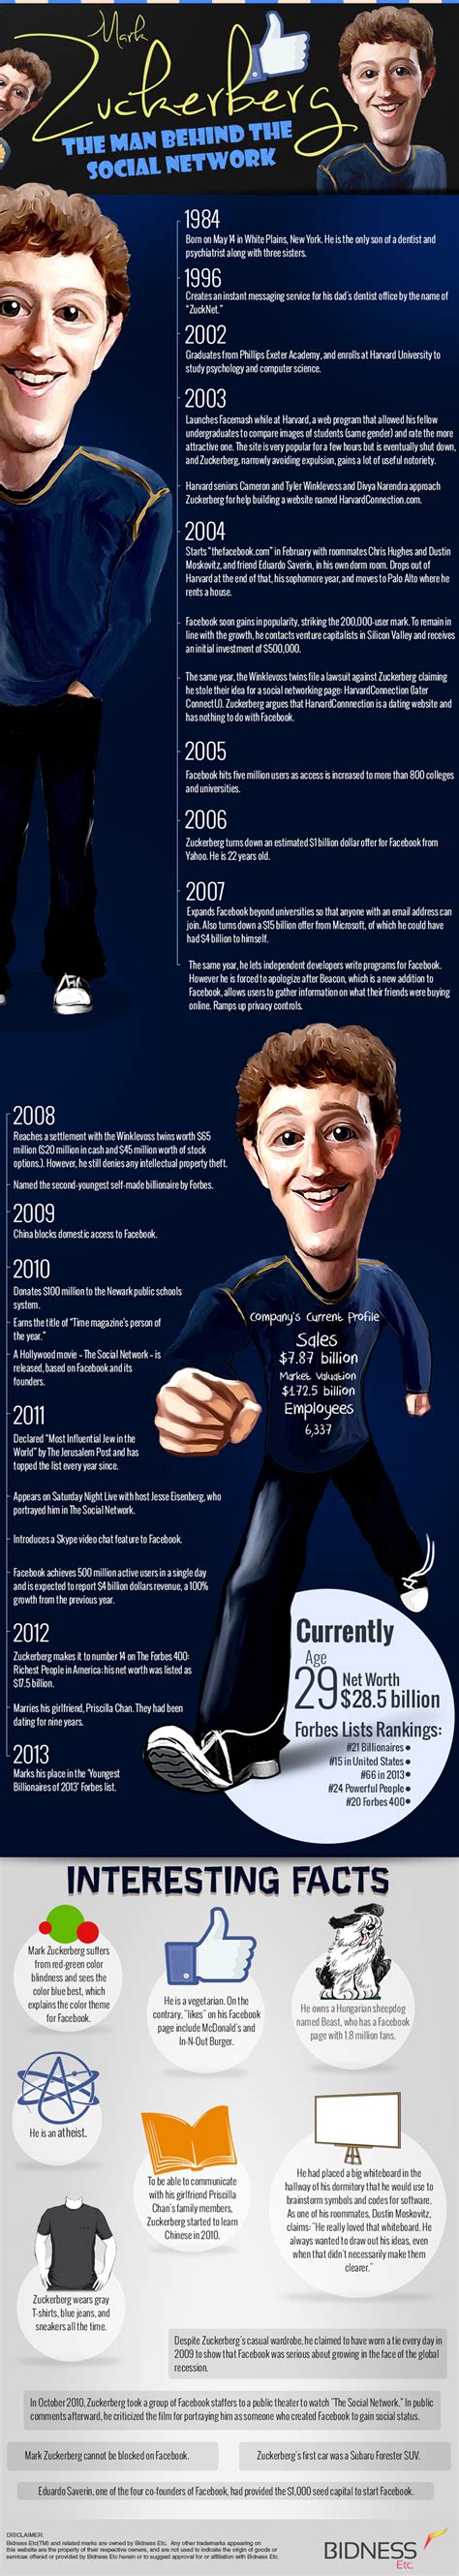 The Life History of Mark Zuckerberg [Infographic]